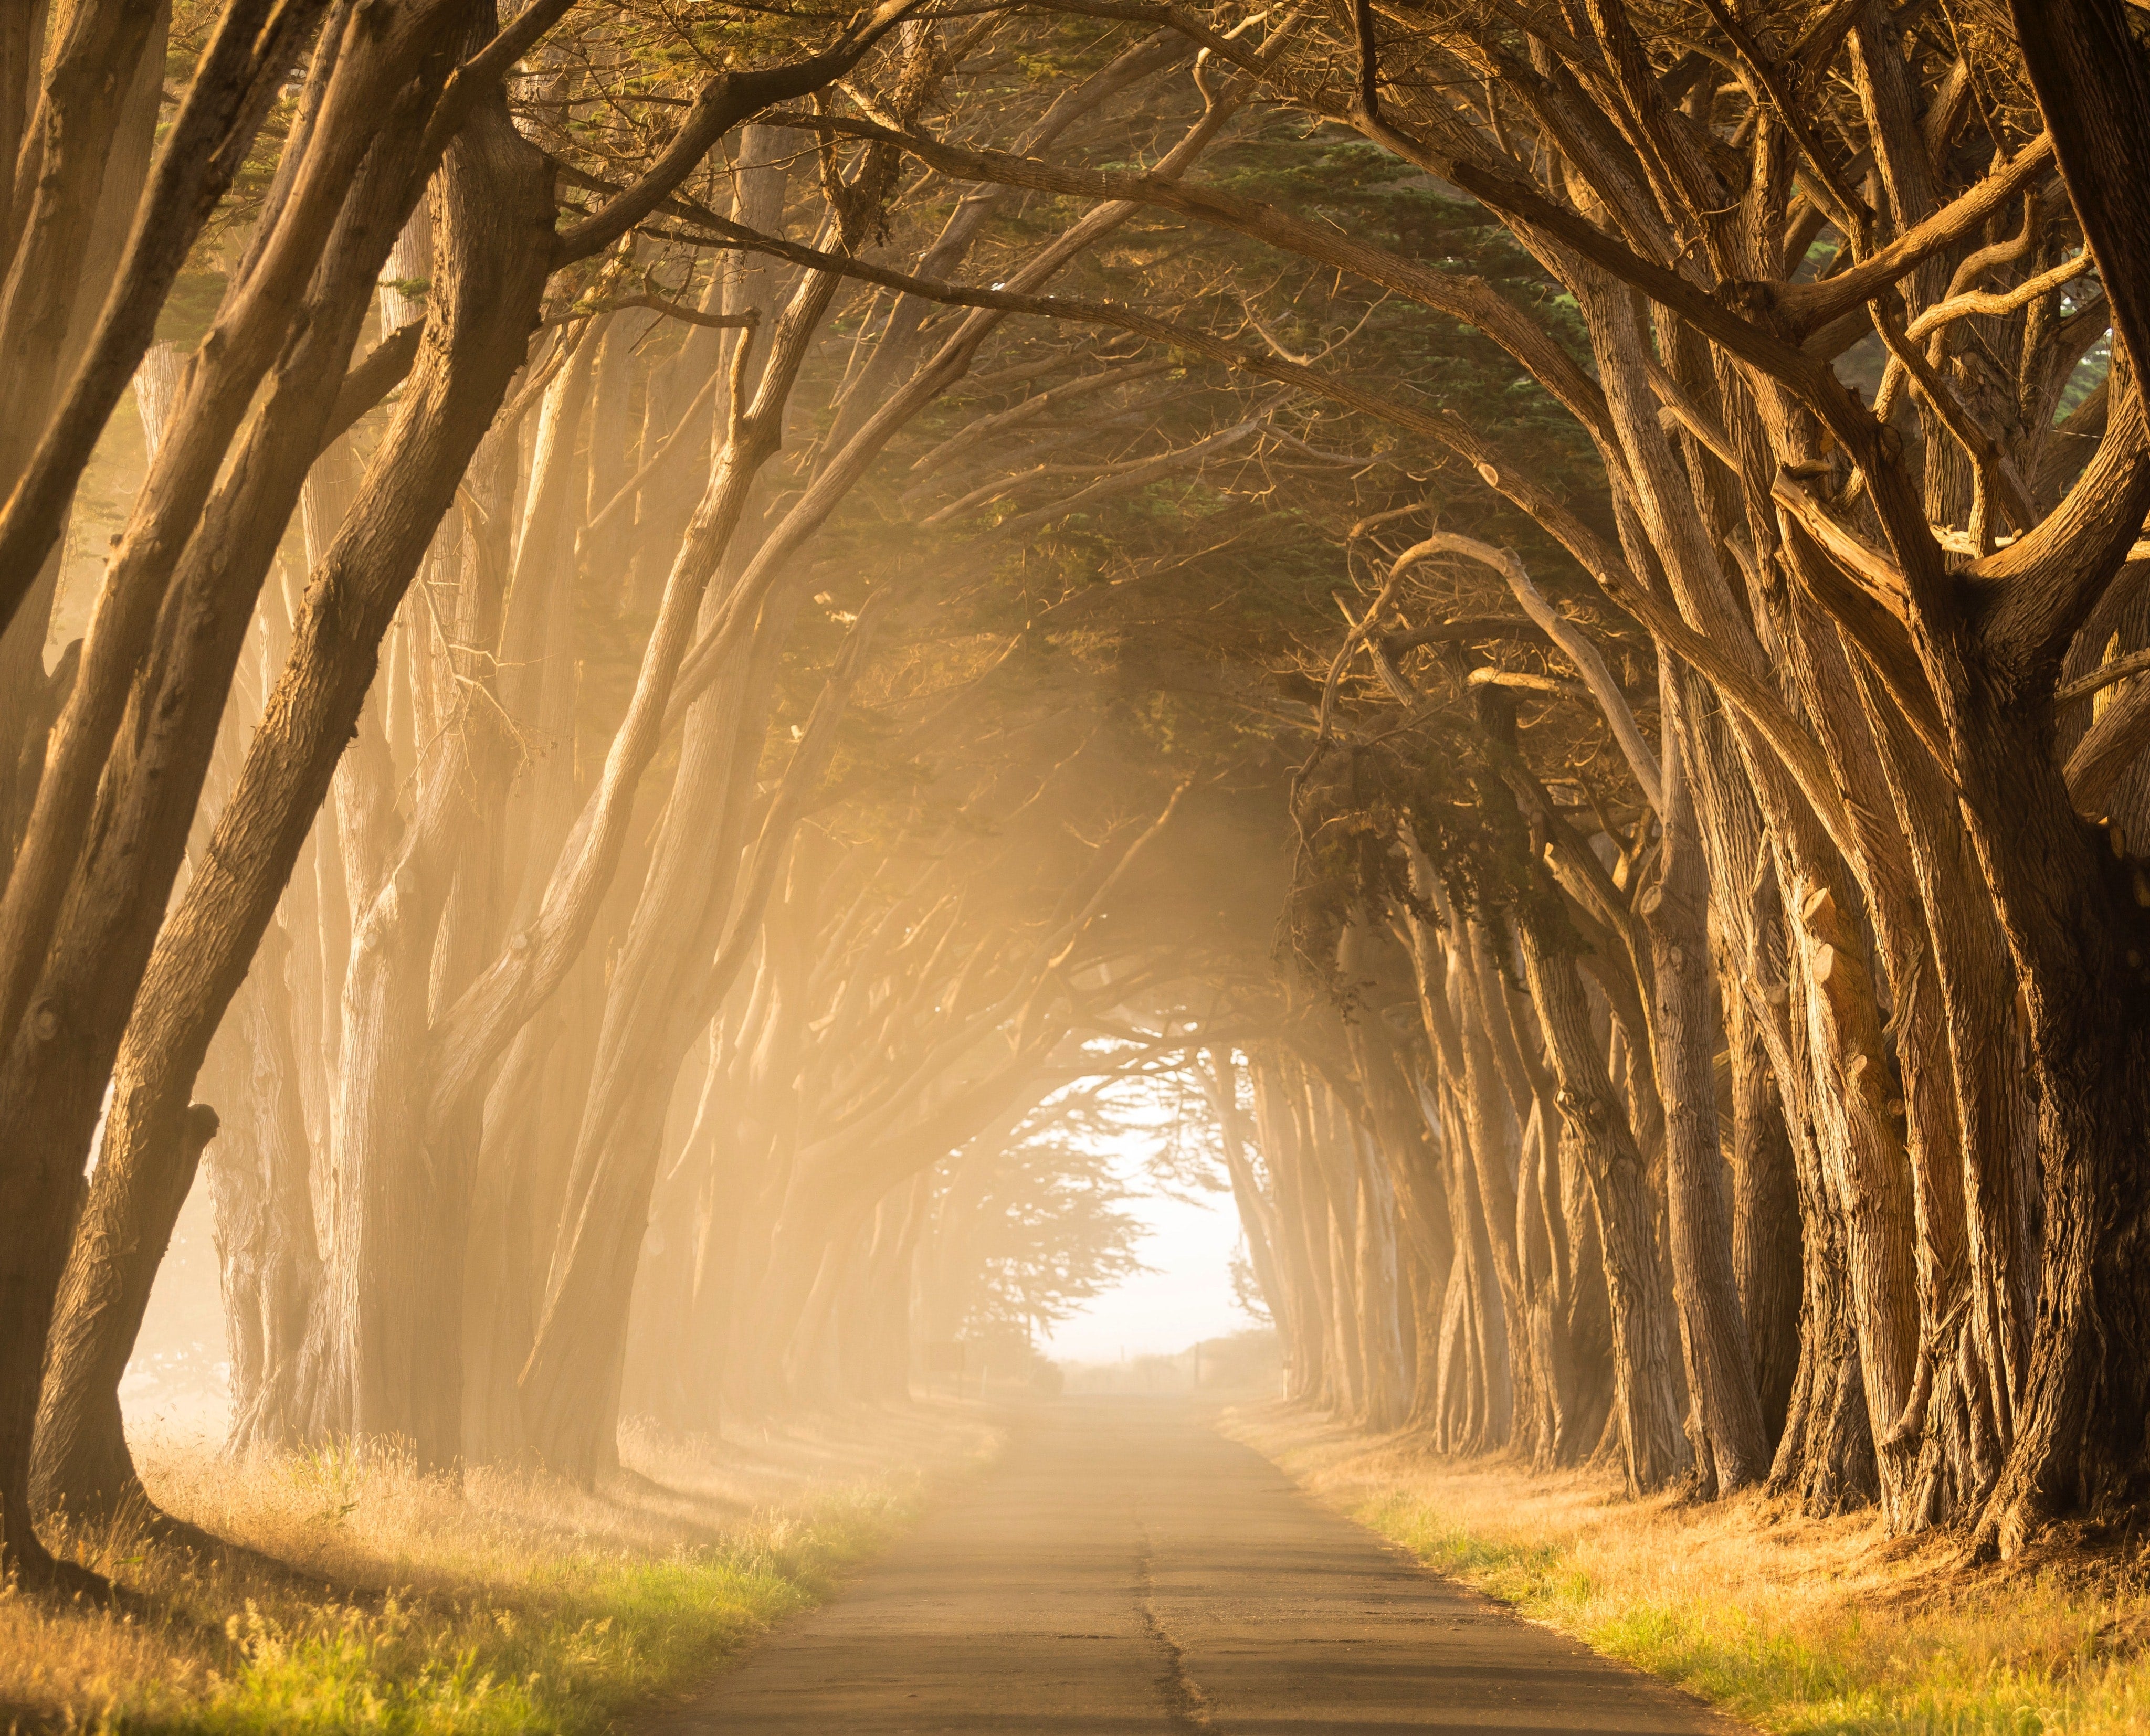 Trees creating a path by Stephen Leonardi